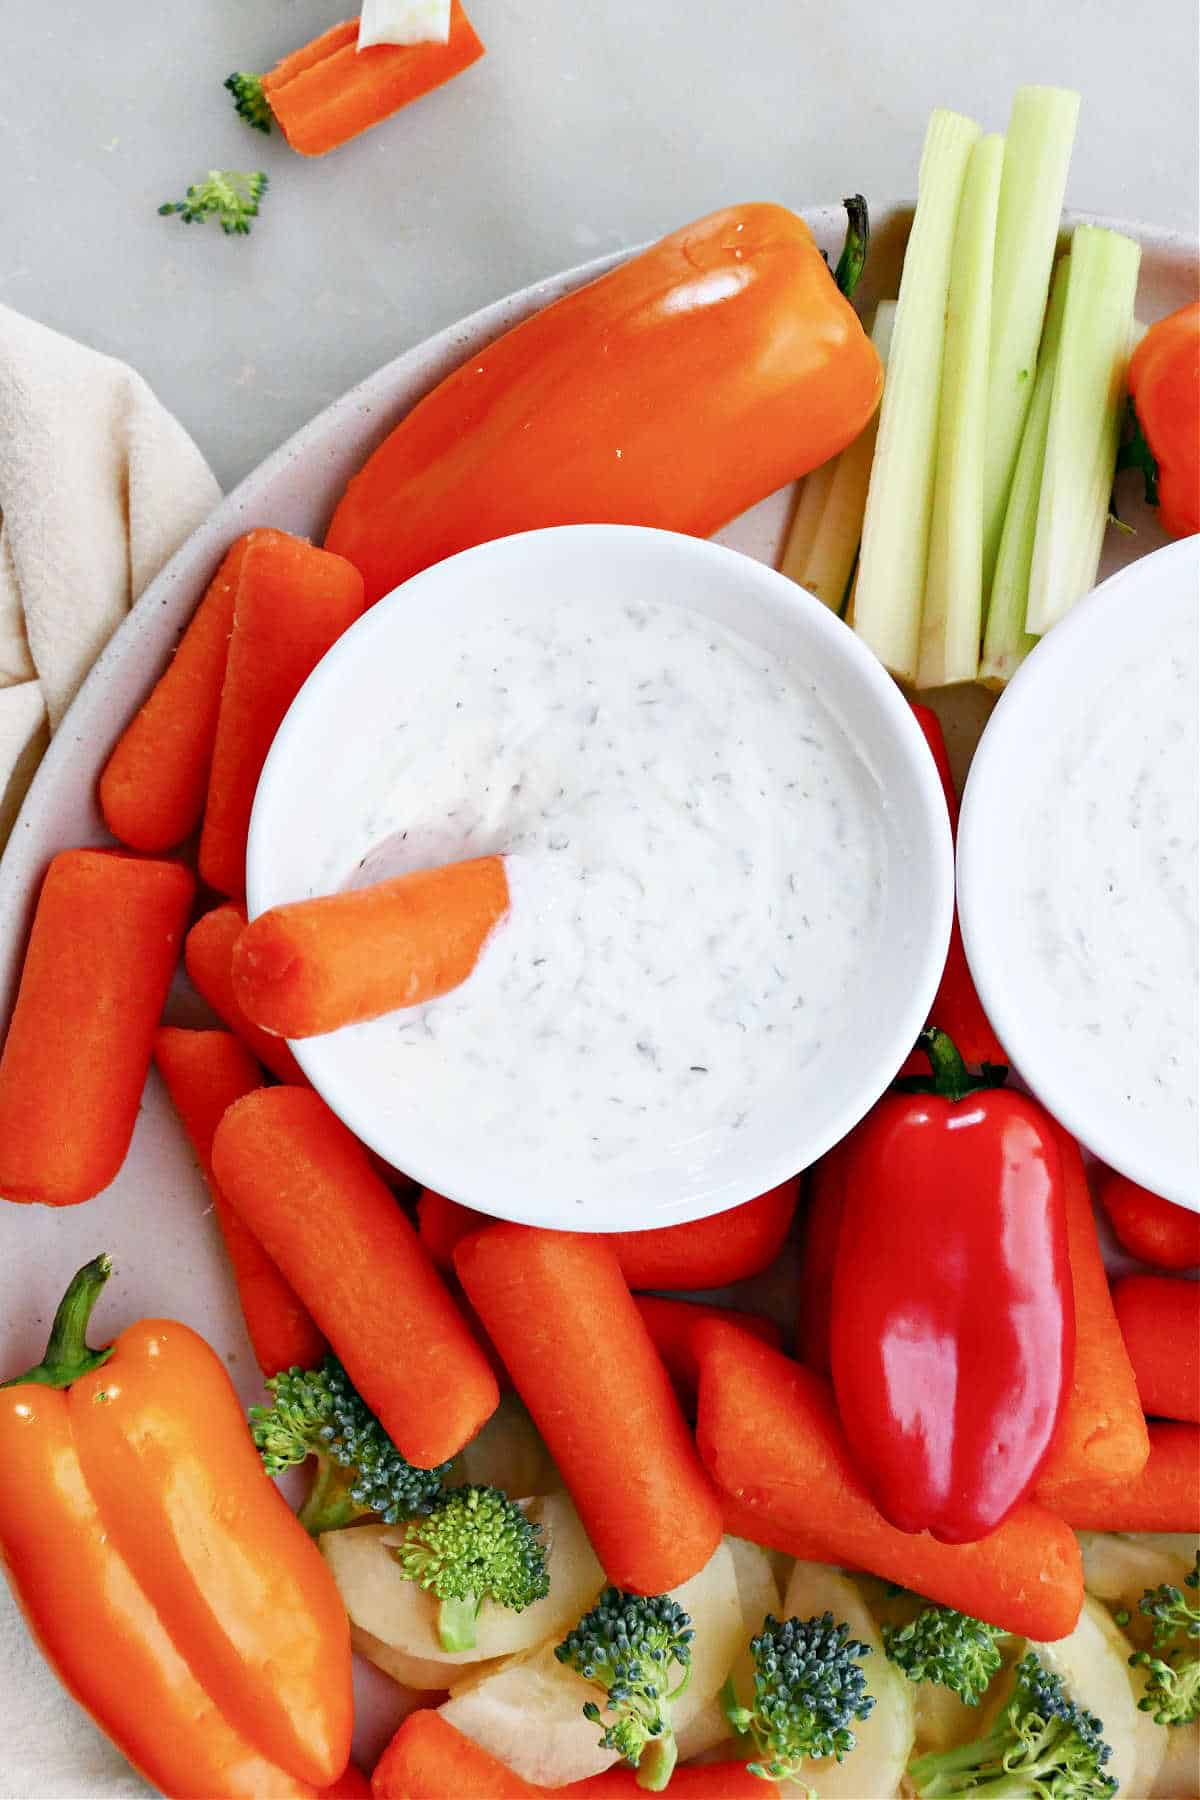 carrot stick being dipped into Greek yogurt dip on a veggie tray